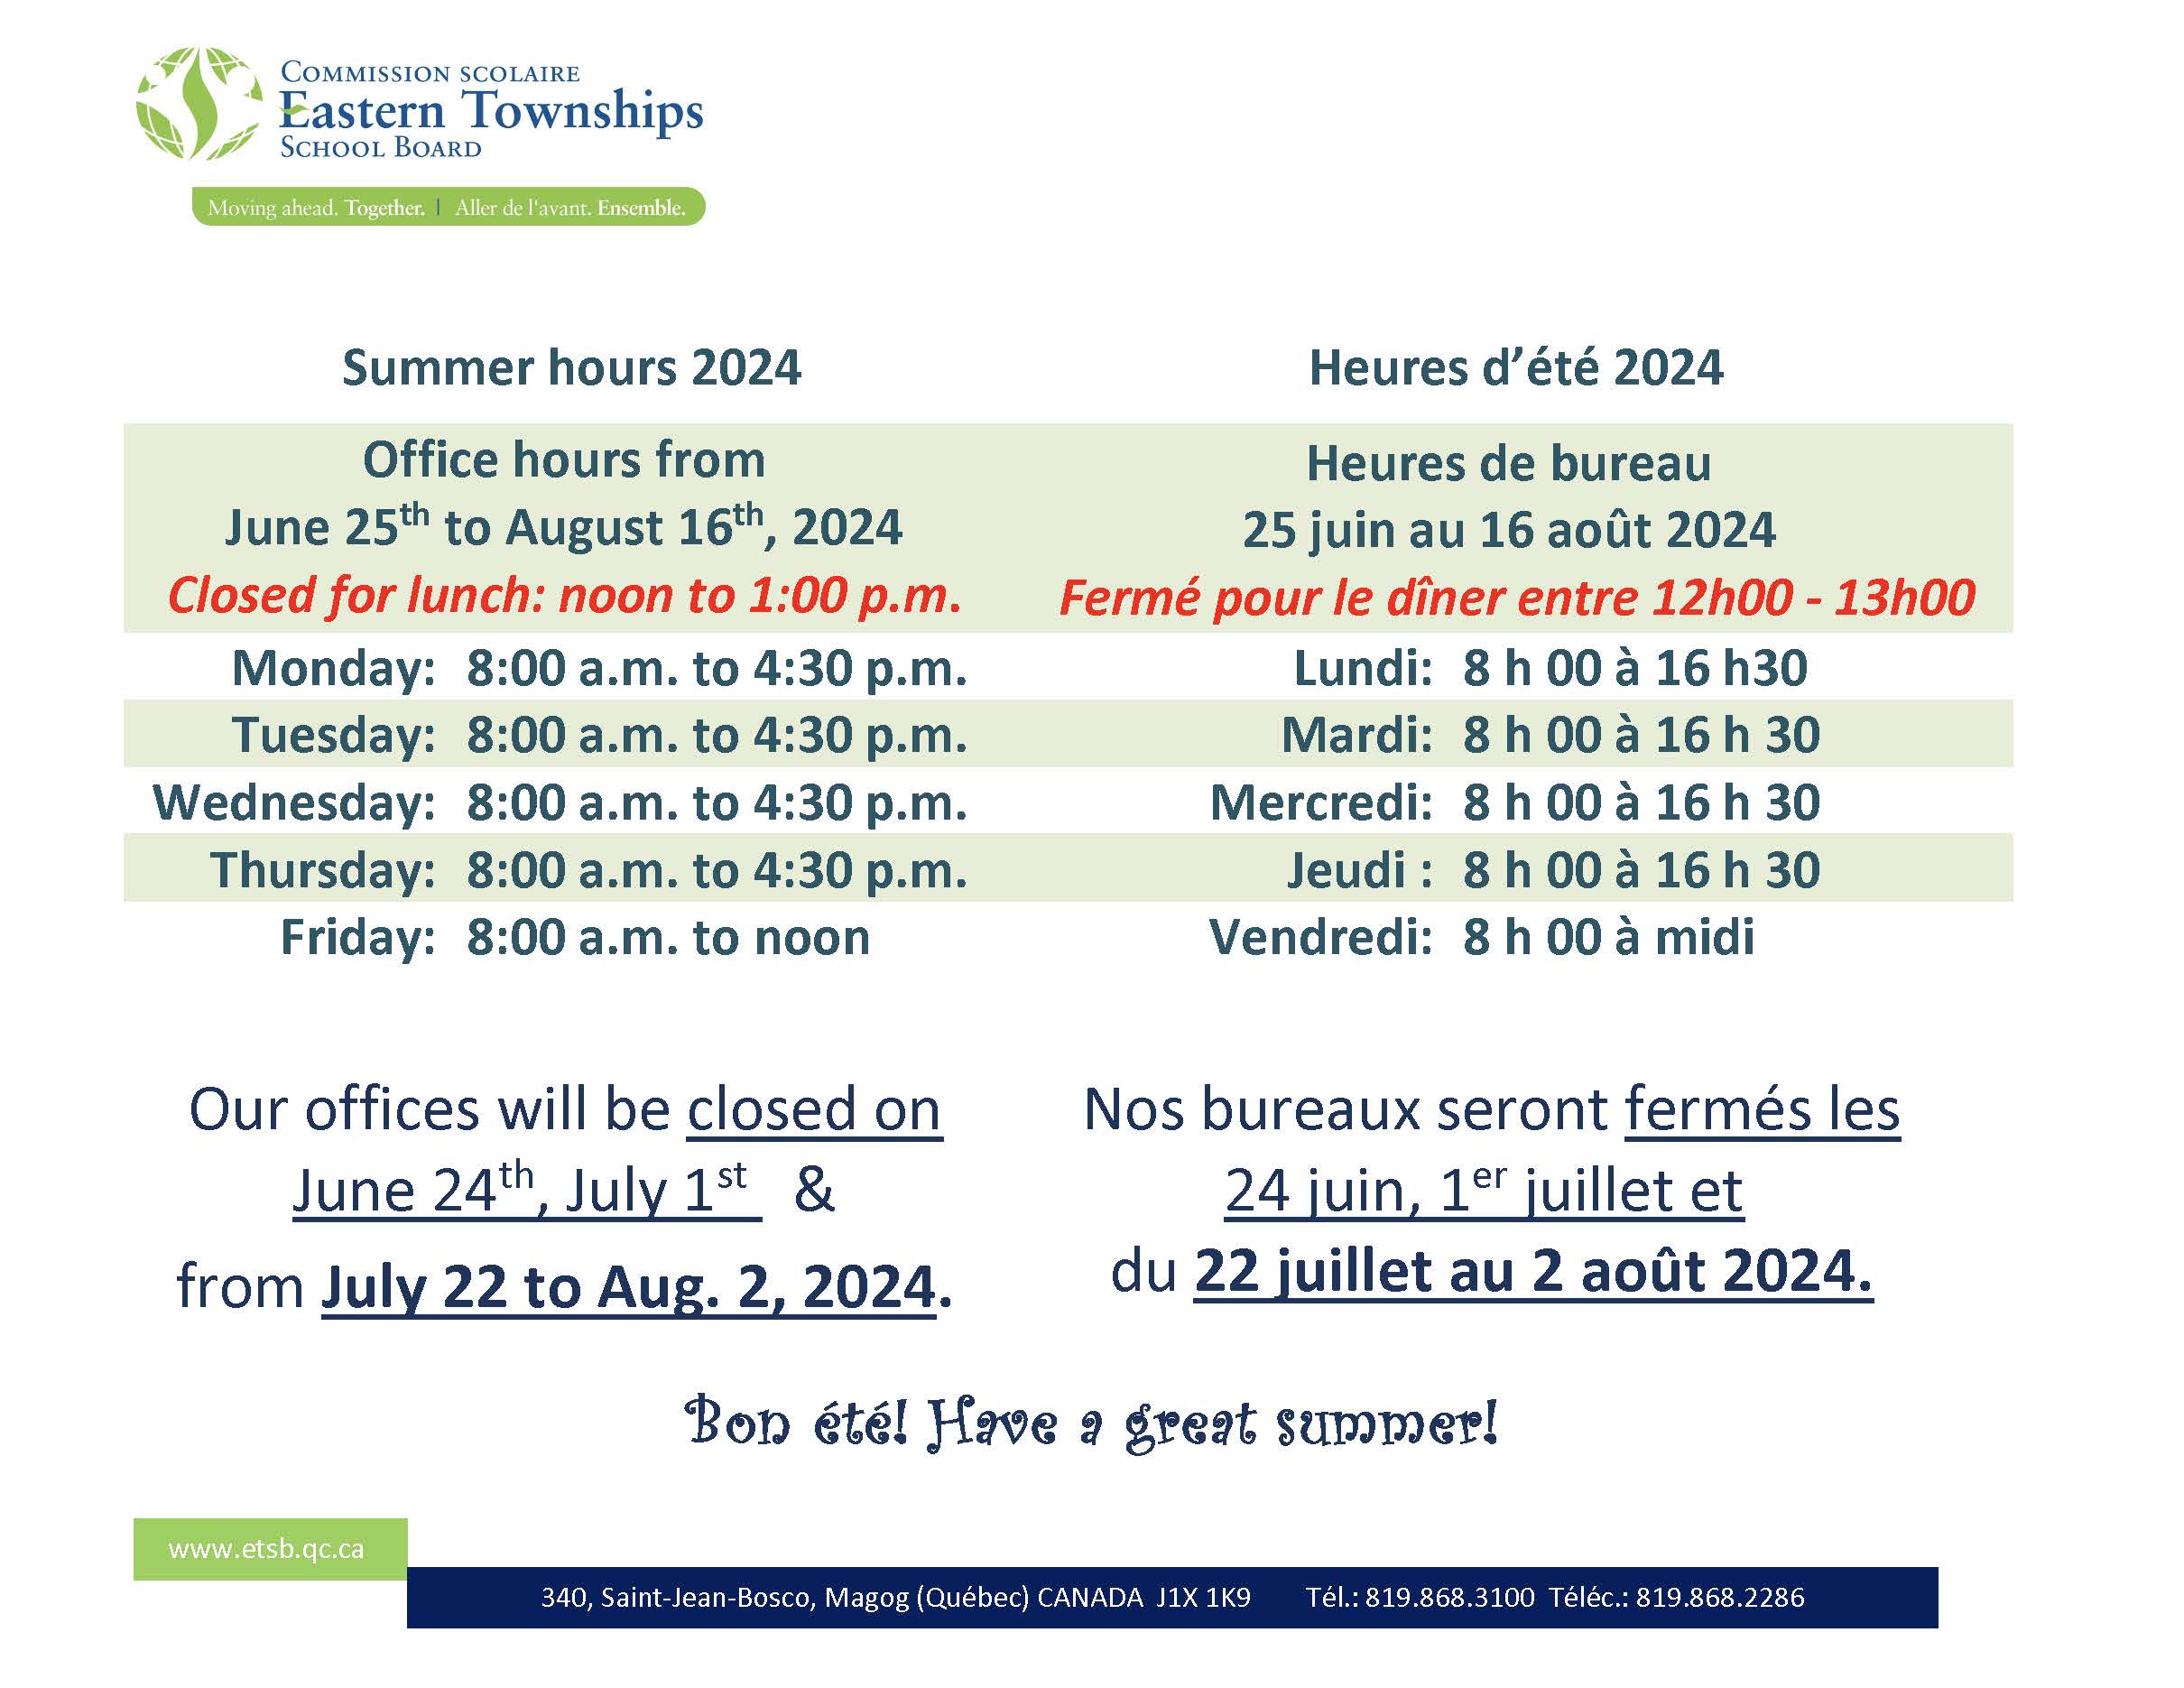 Summer shutdown 2024 with summer hours